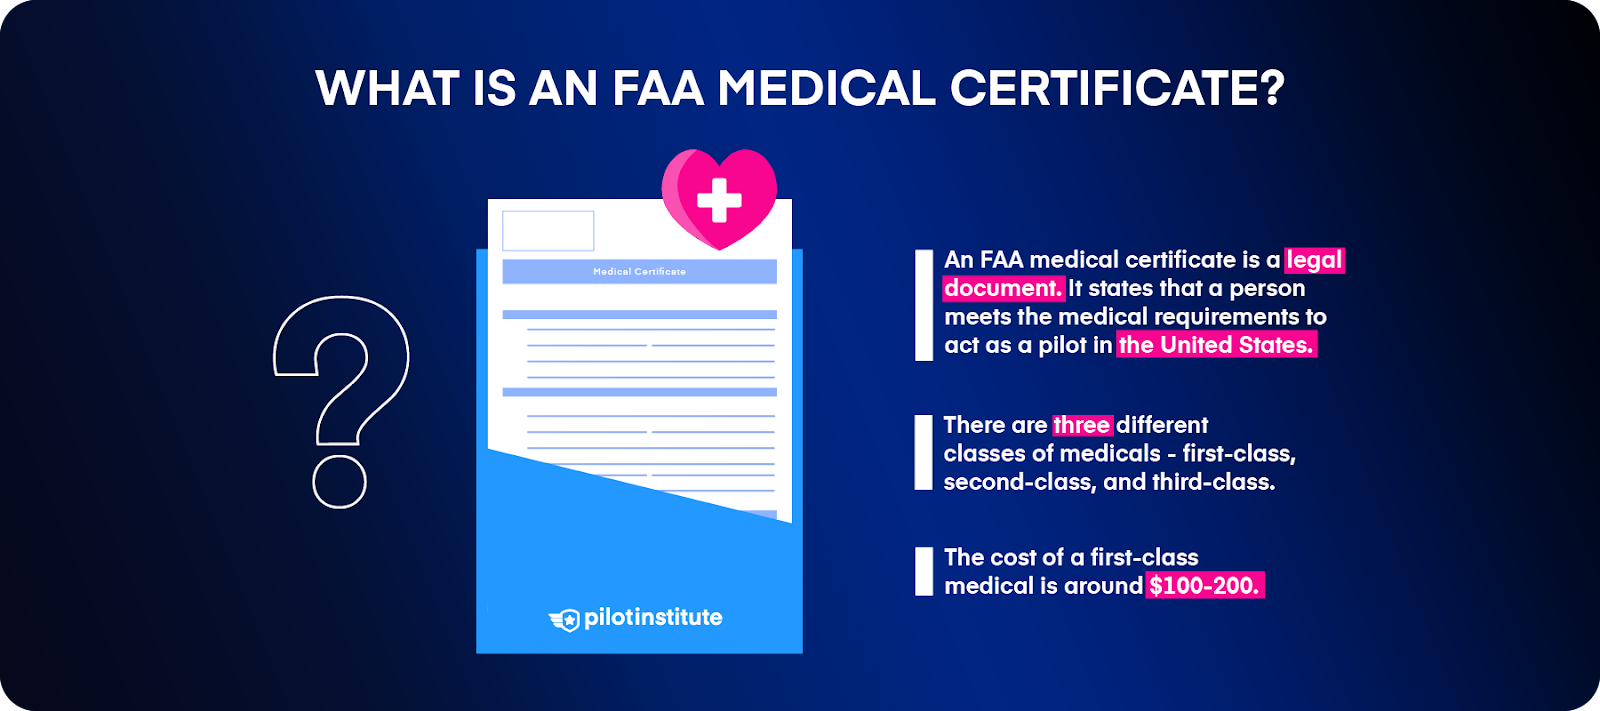 An infographic describing what an FAA medical certificate is.